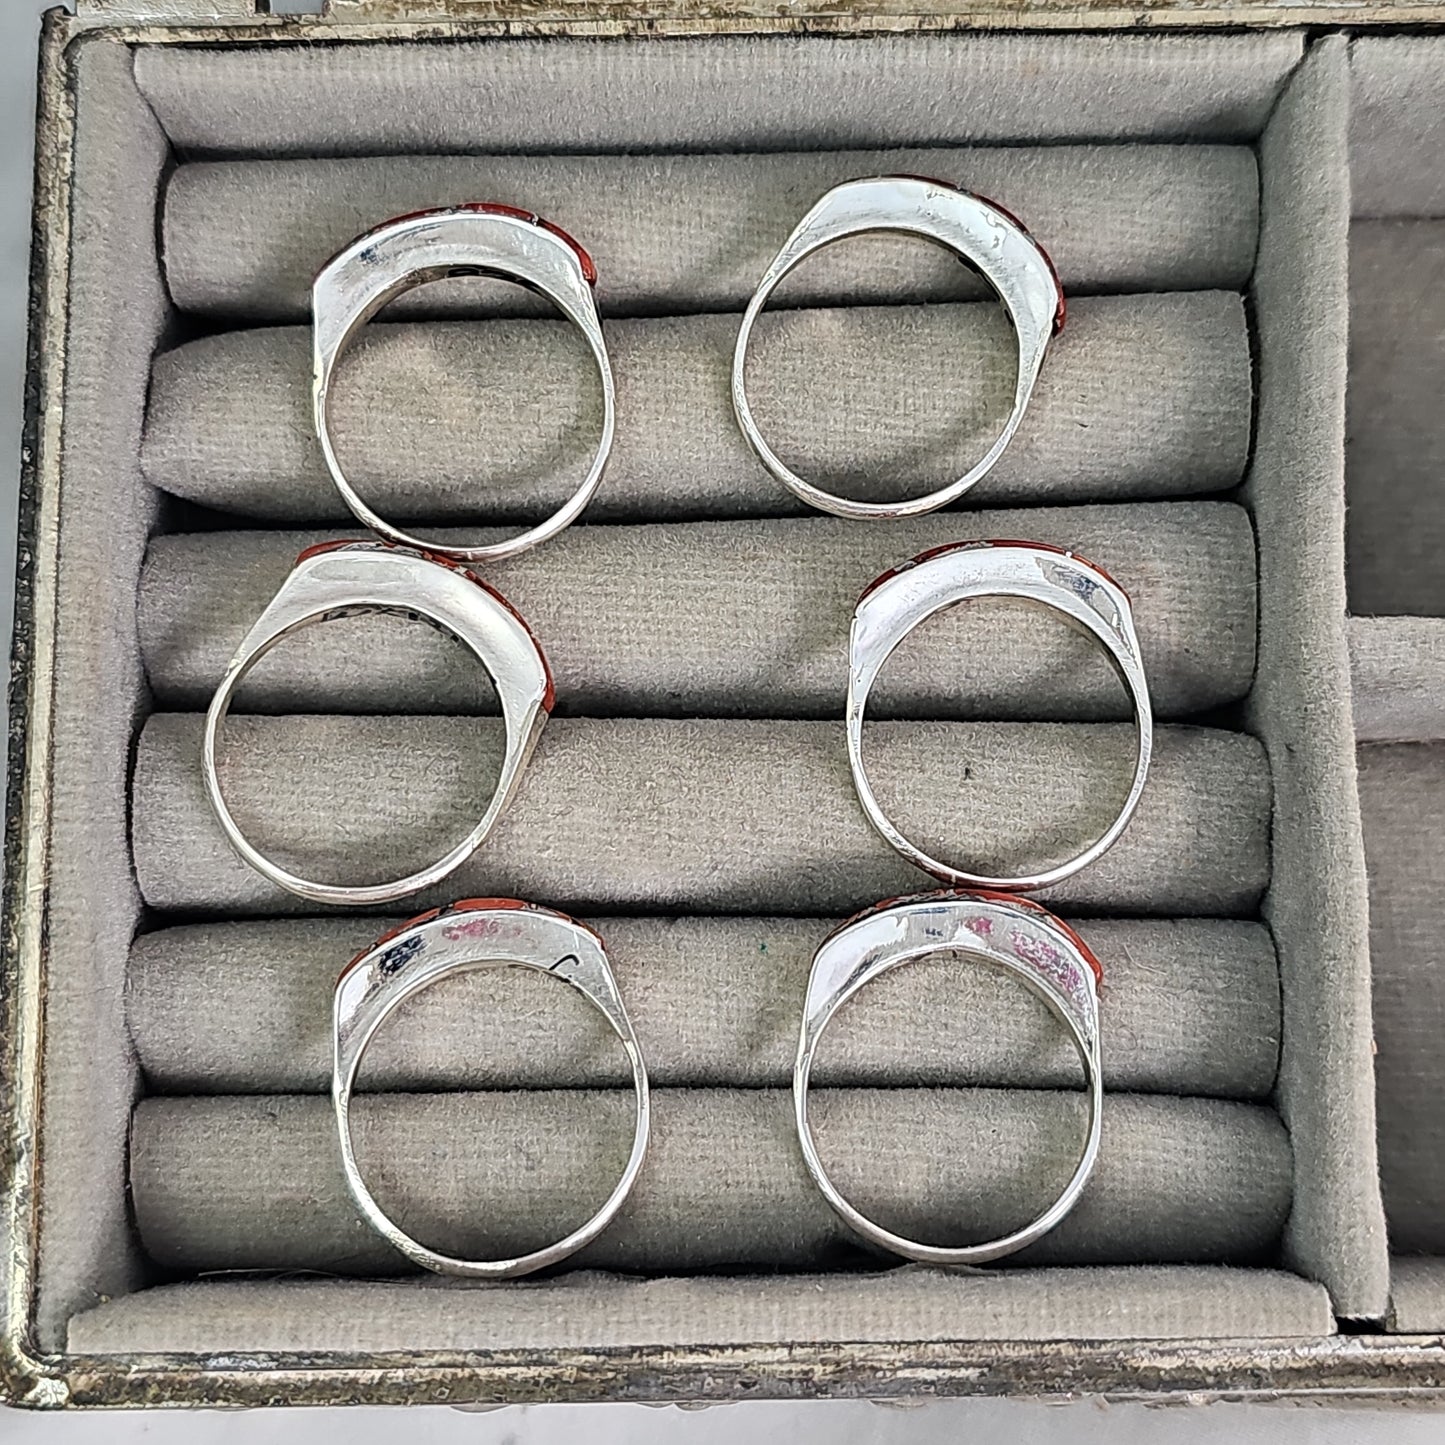 Coral band ring